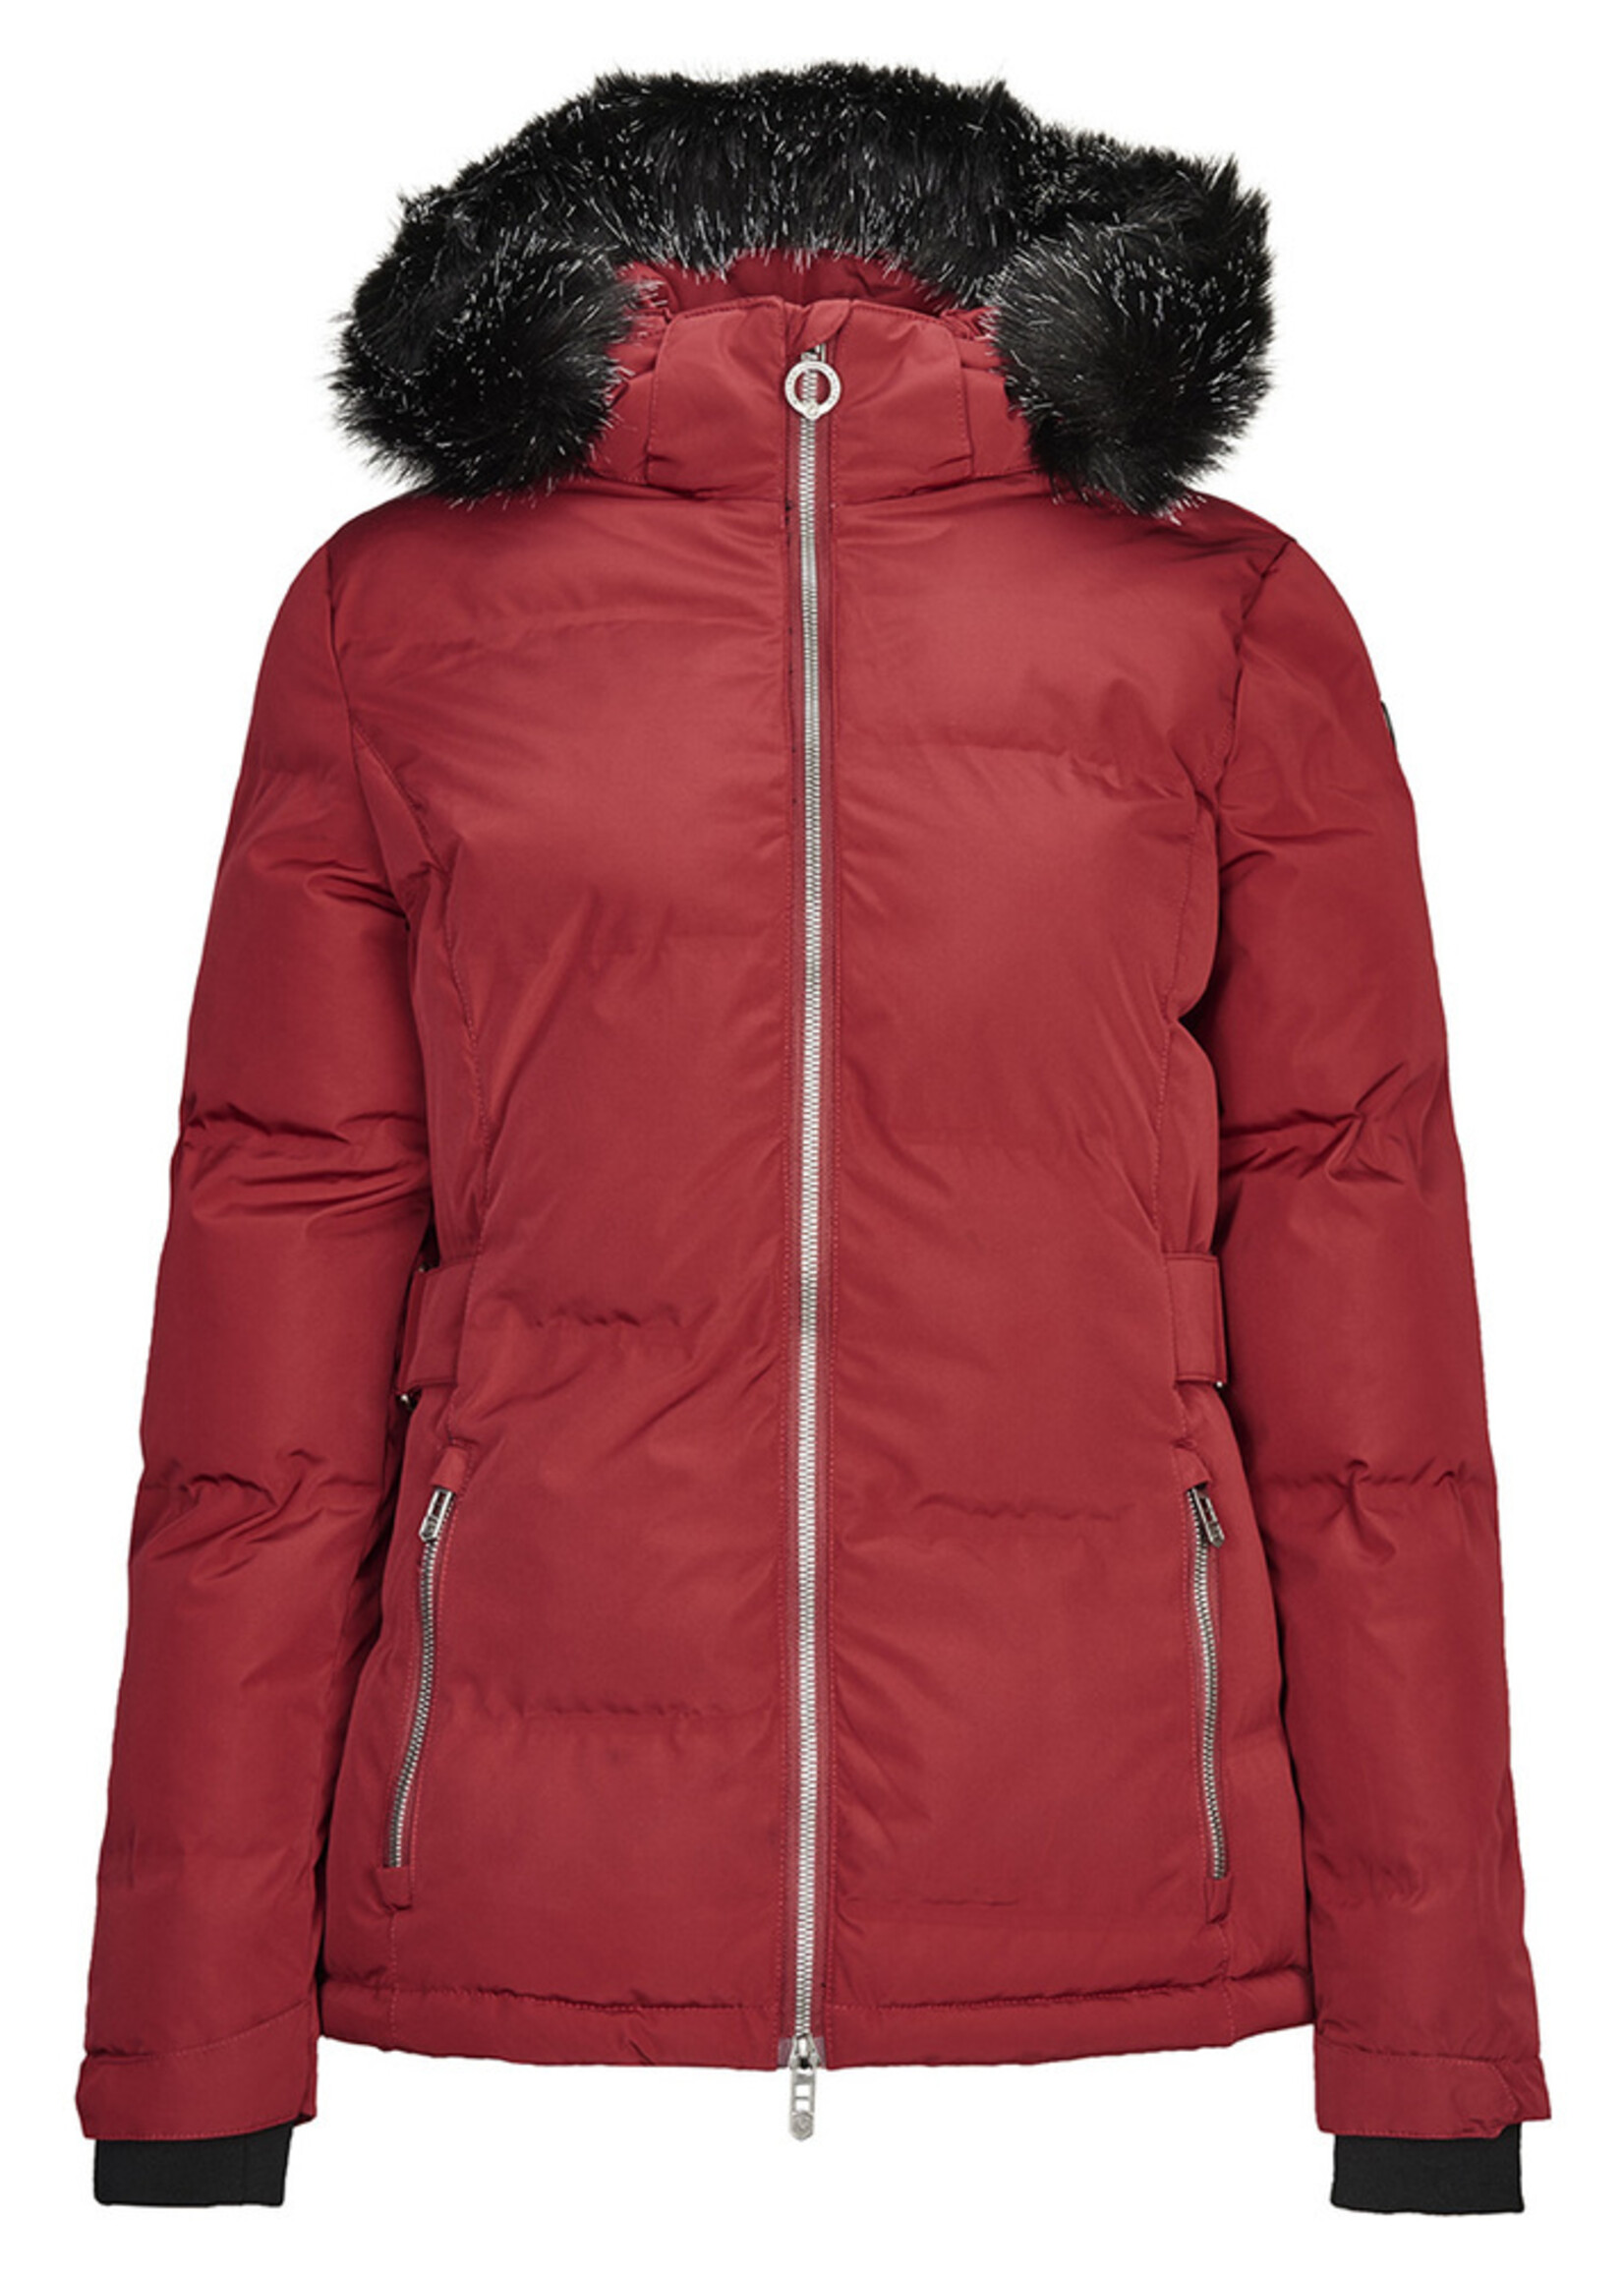 Killtec Arela Winter Jacket